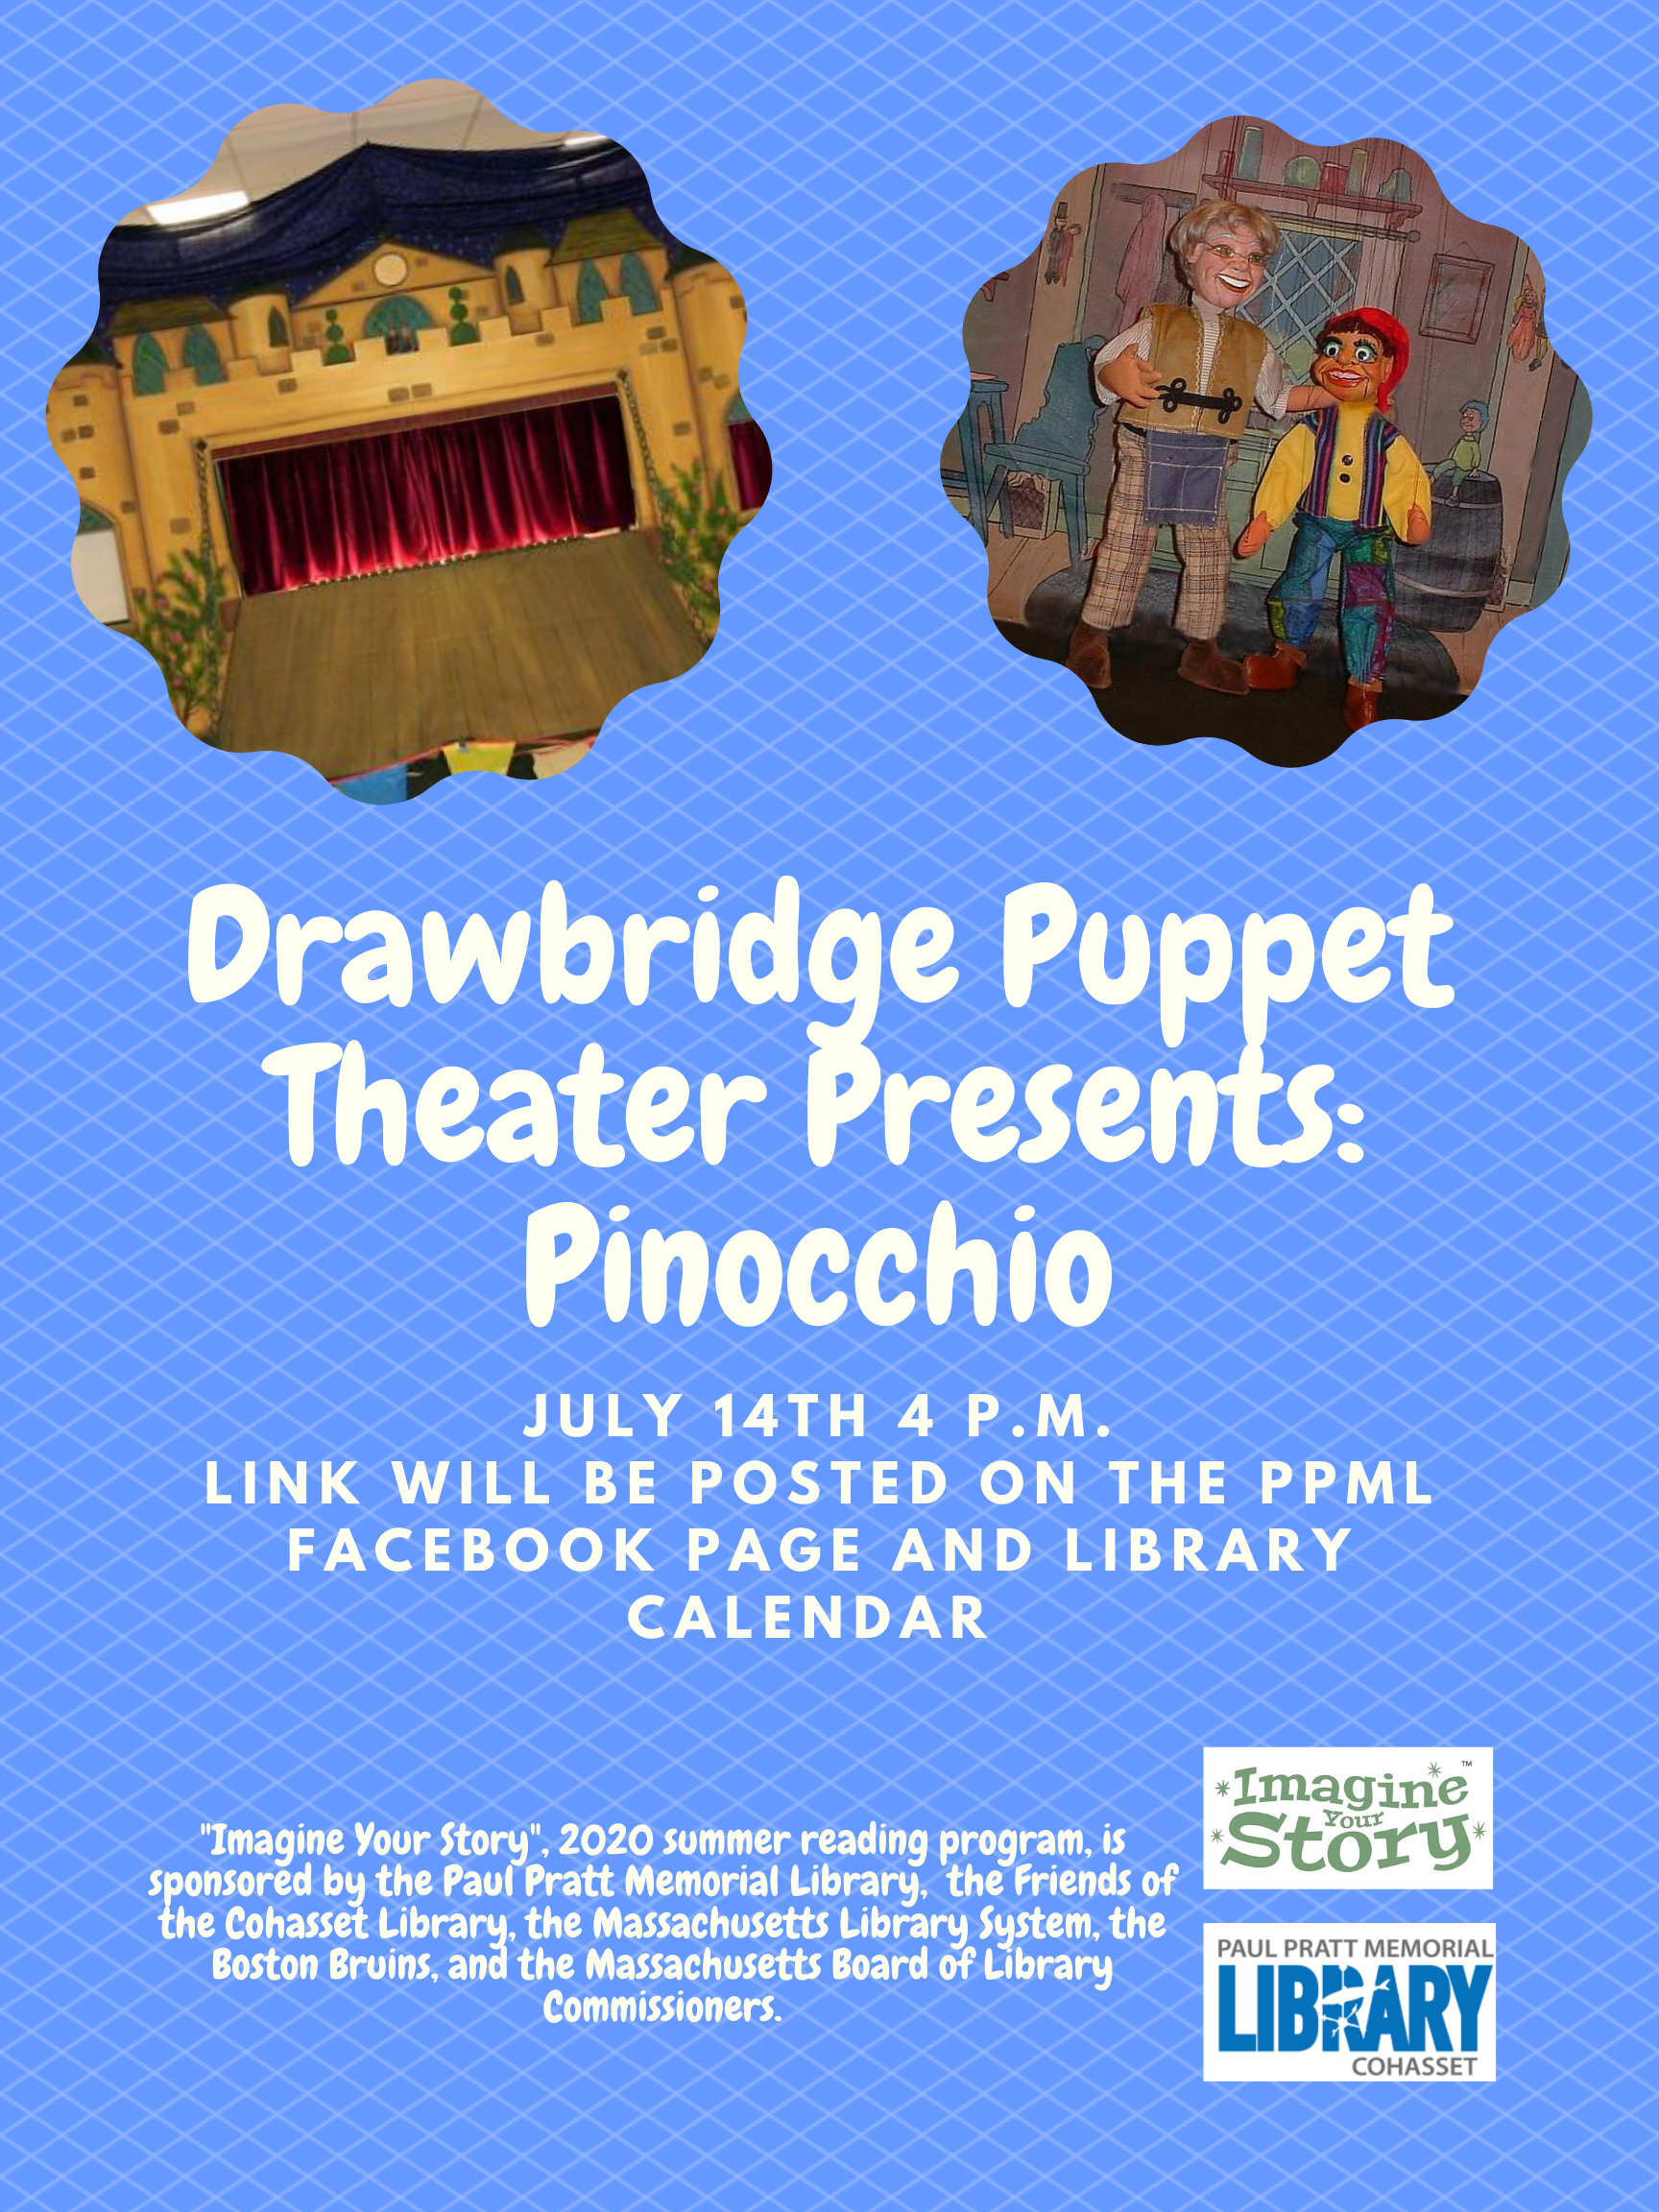 Puppet theater featuring Pinoccio